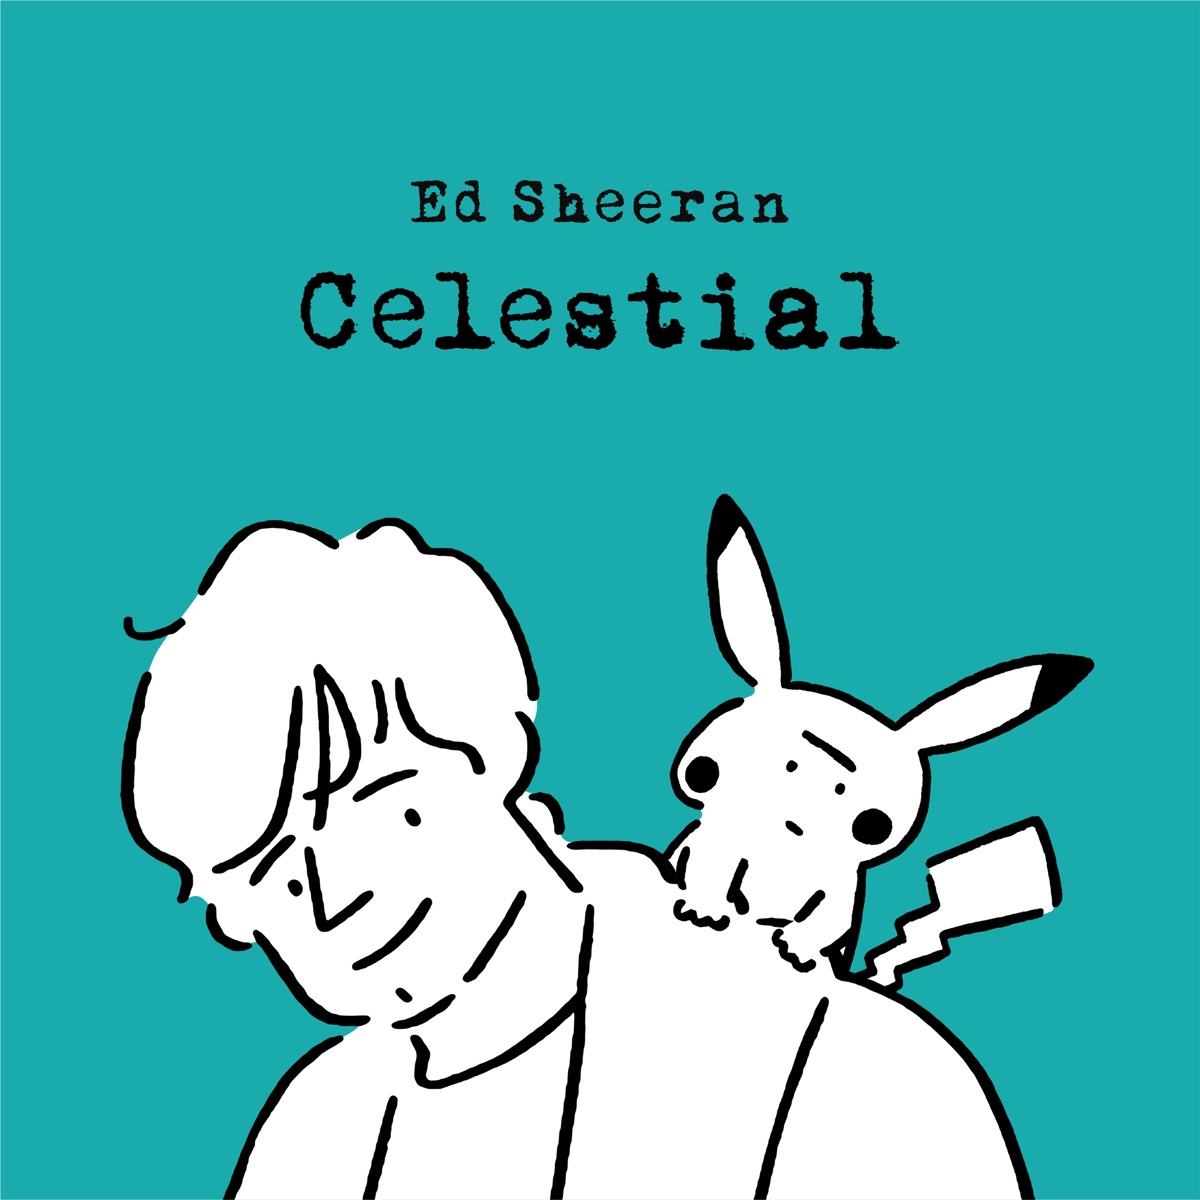 Cover art for『Ed Sheeran - Celestial』from the release『Celestial』